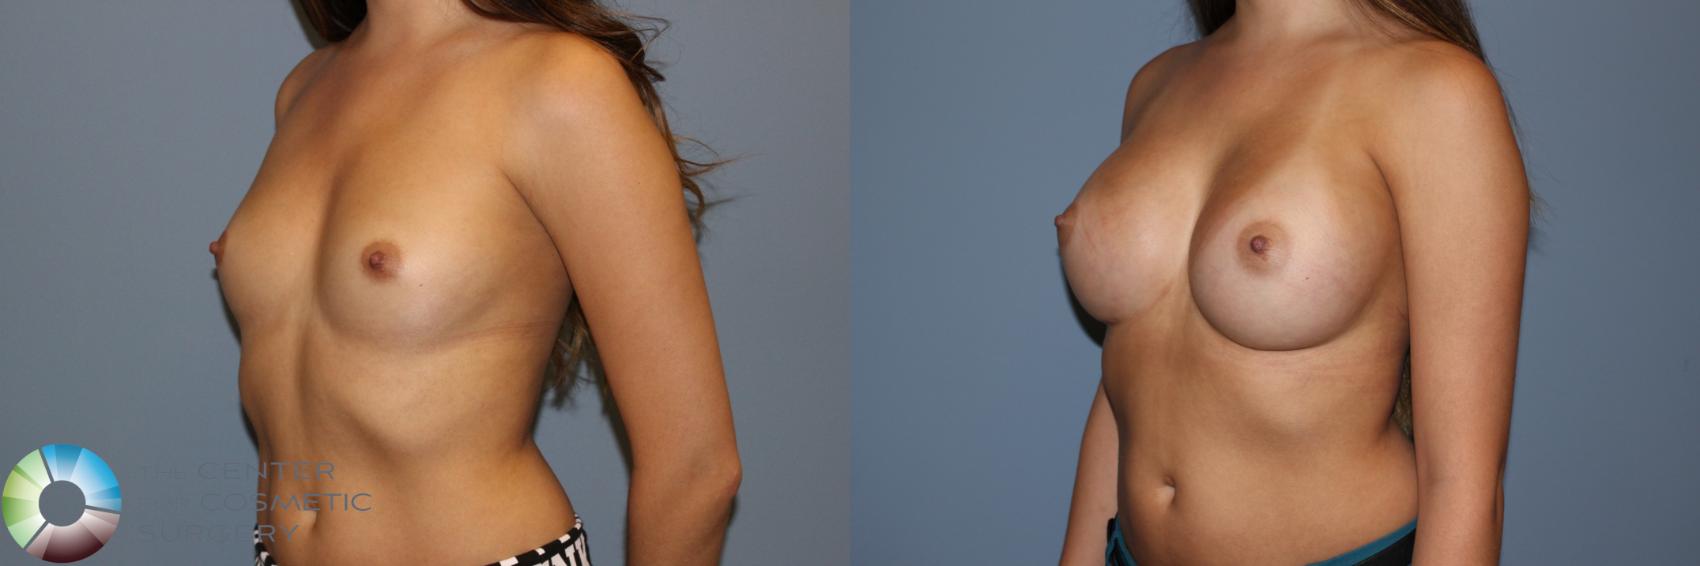 Before & After Breast Augmentation Case 11502 Left Oblique View in Denver & Golden, CO